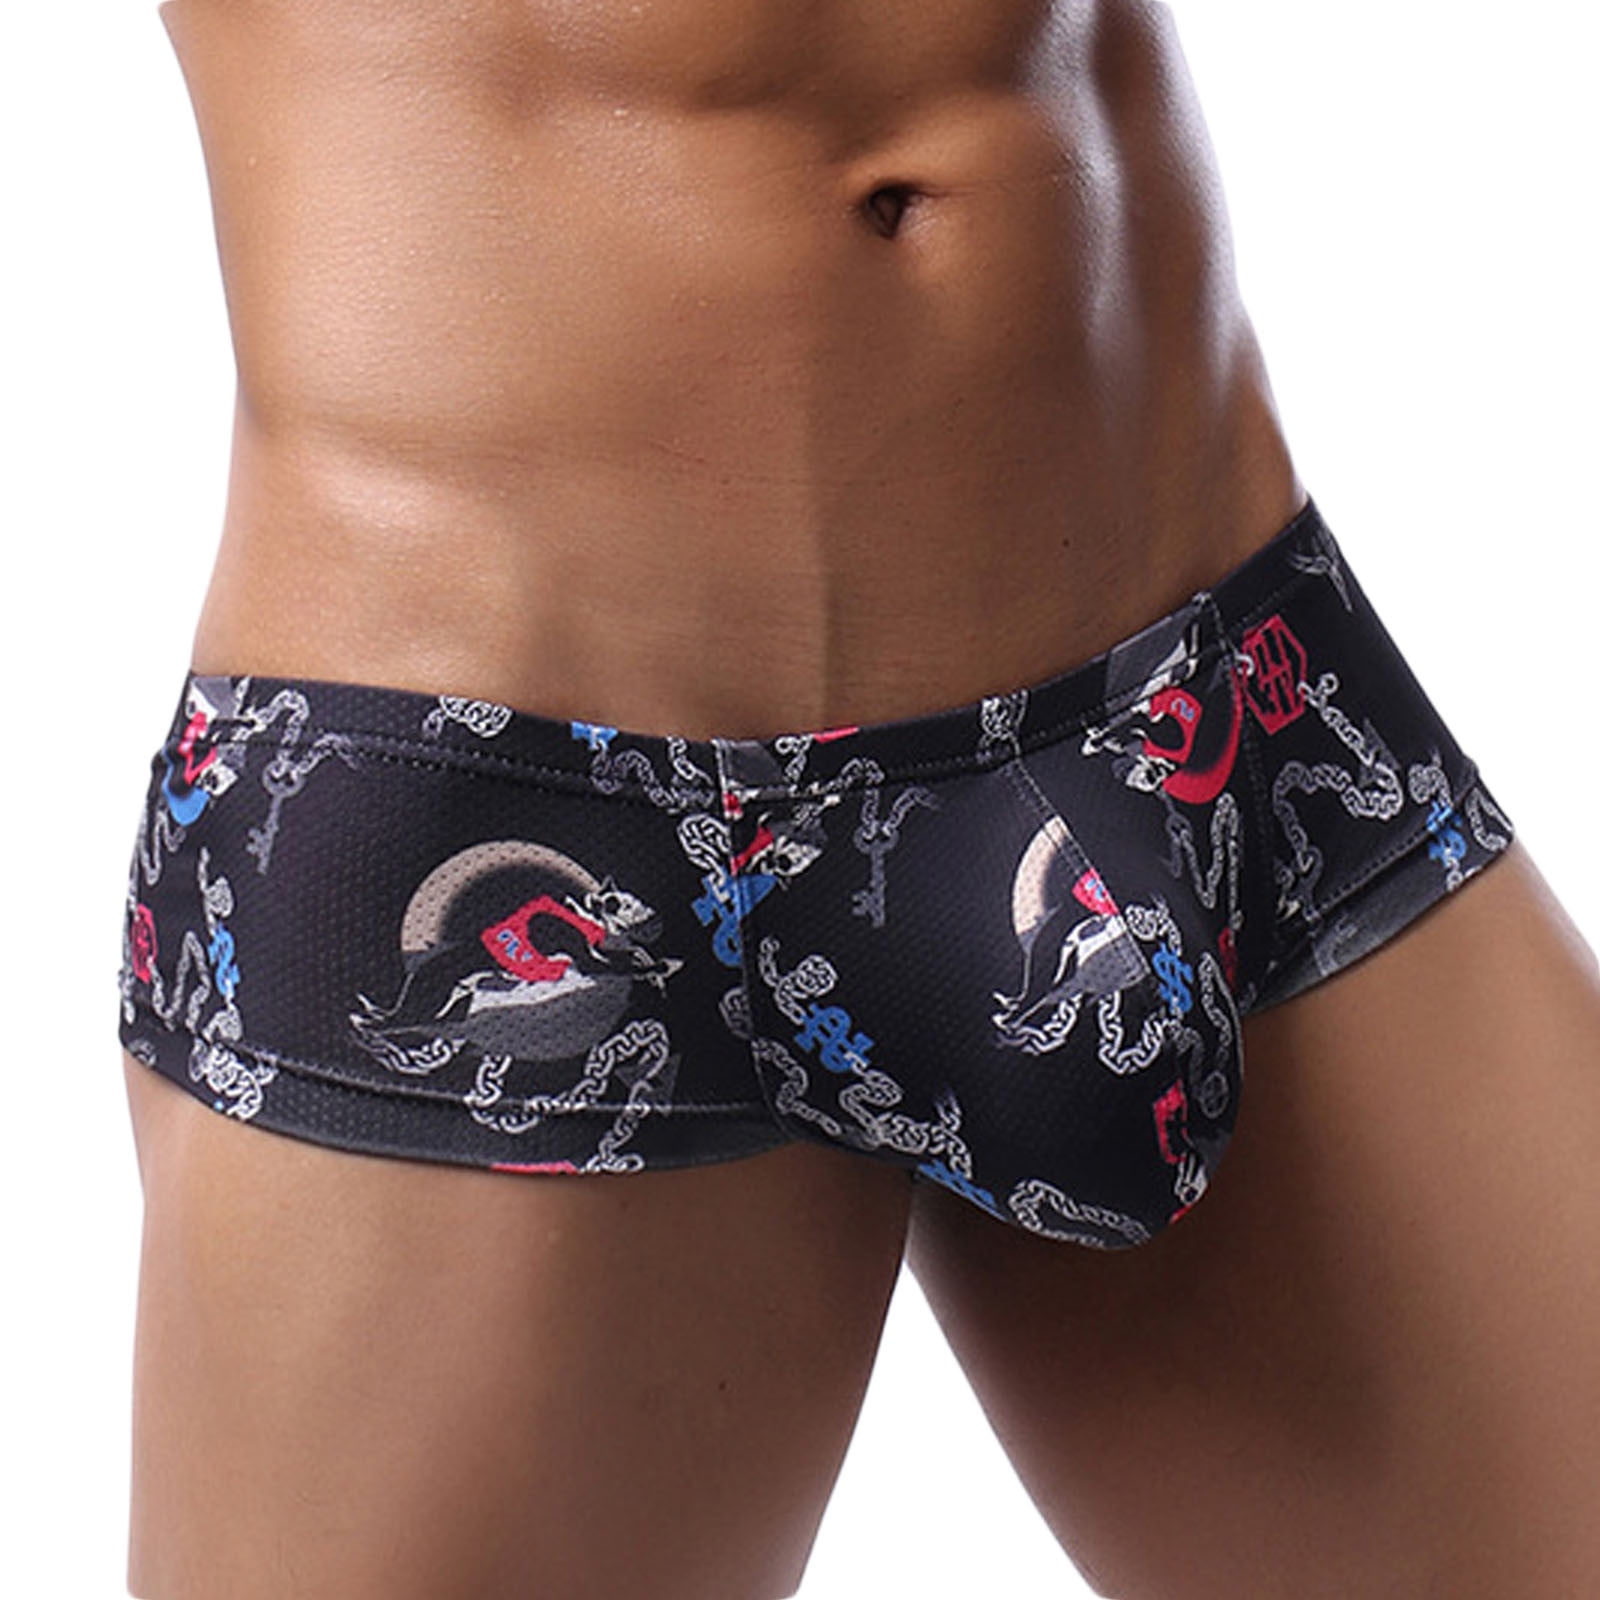 3Pack Sexy Men's Elephant Trunk Boxer Briefs Mesh Panties Printed